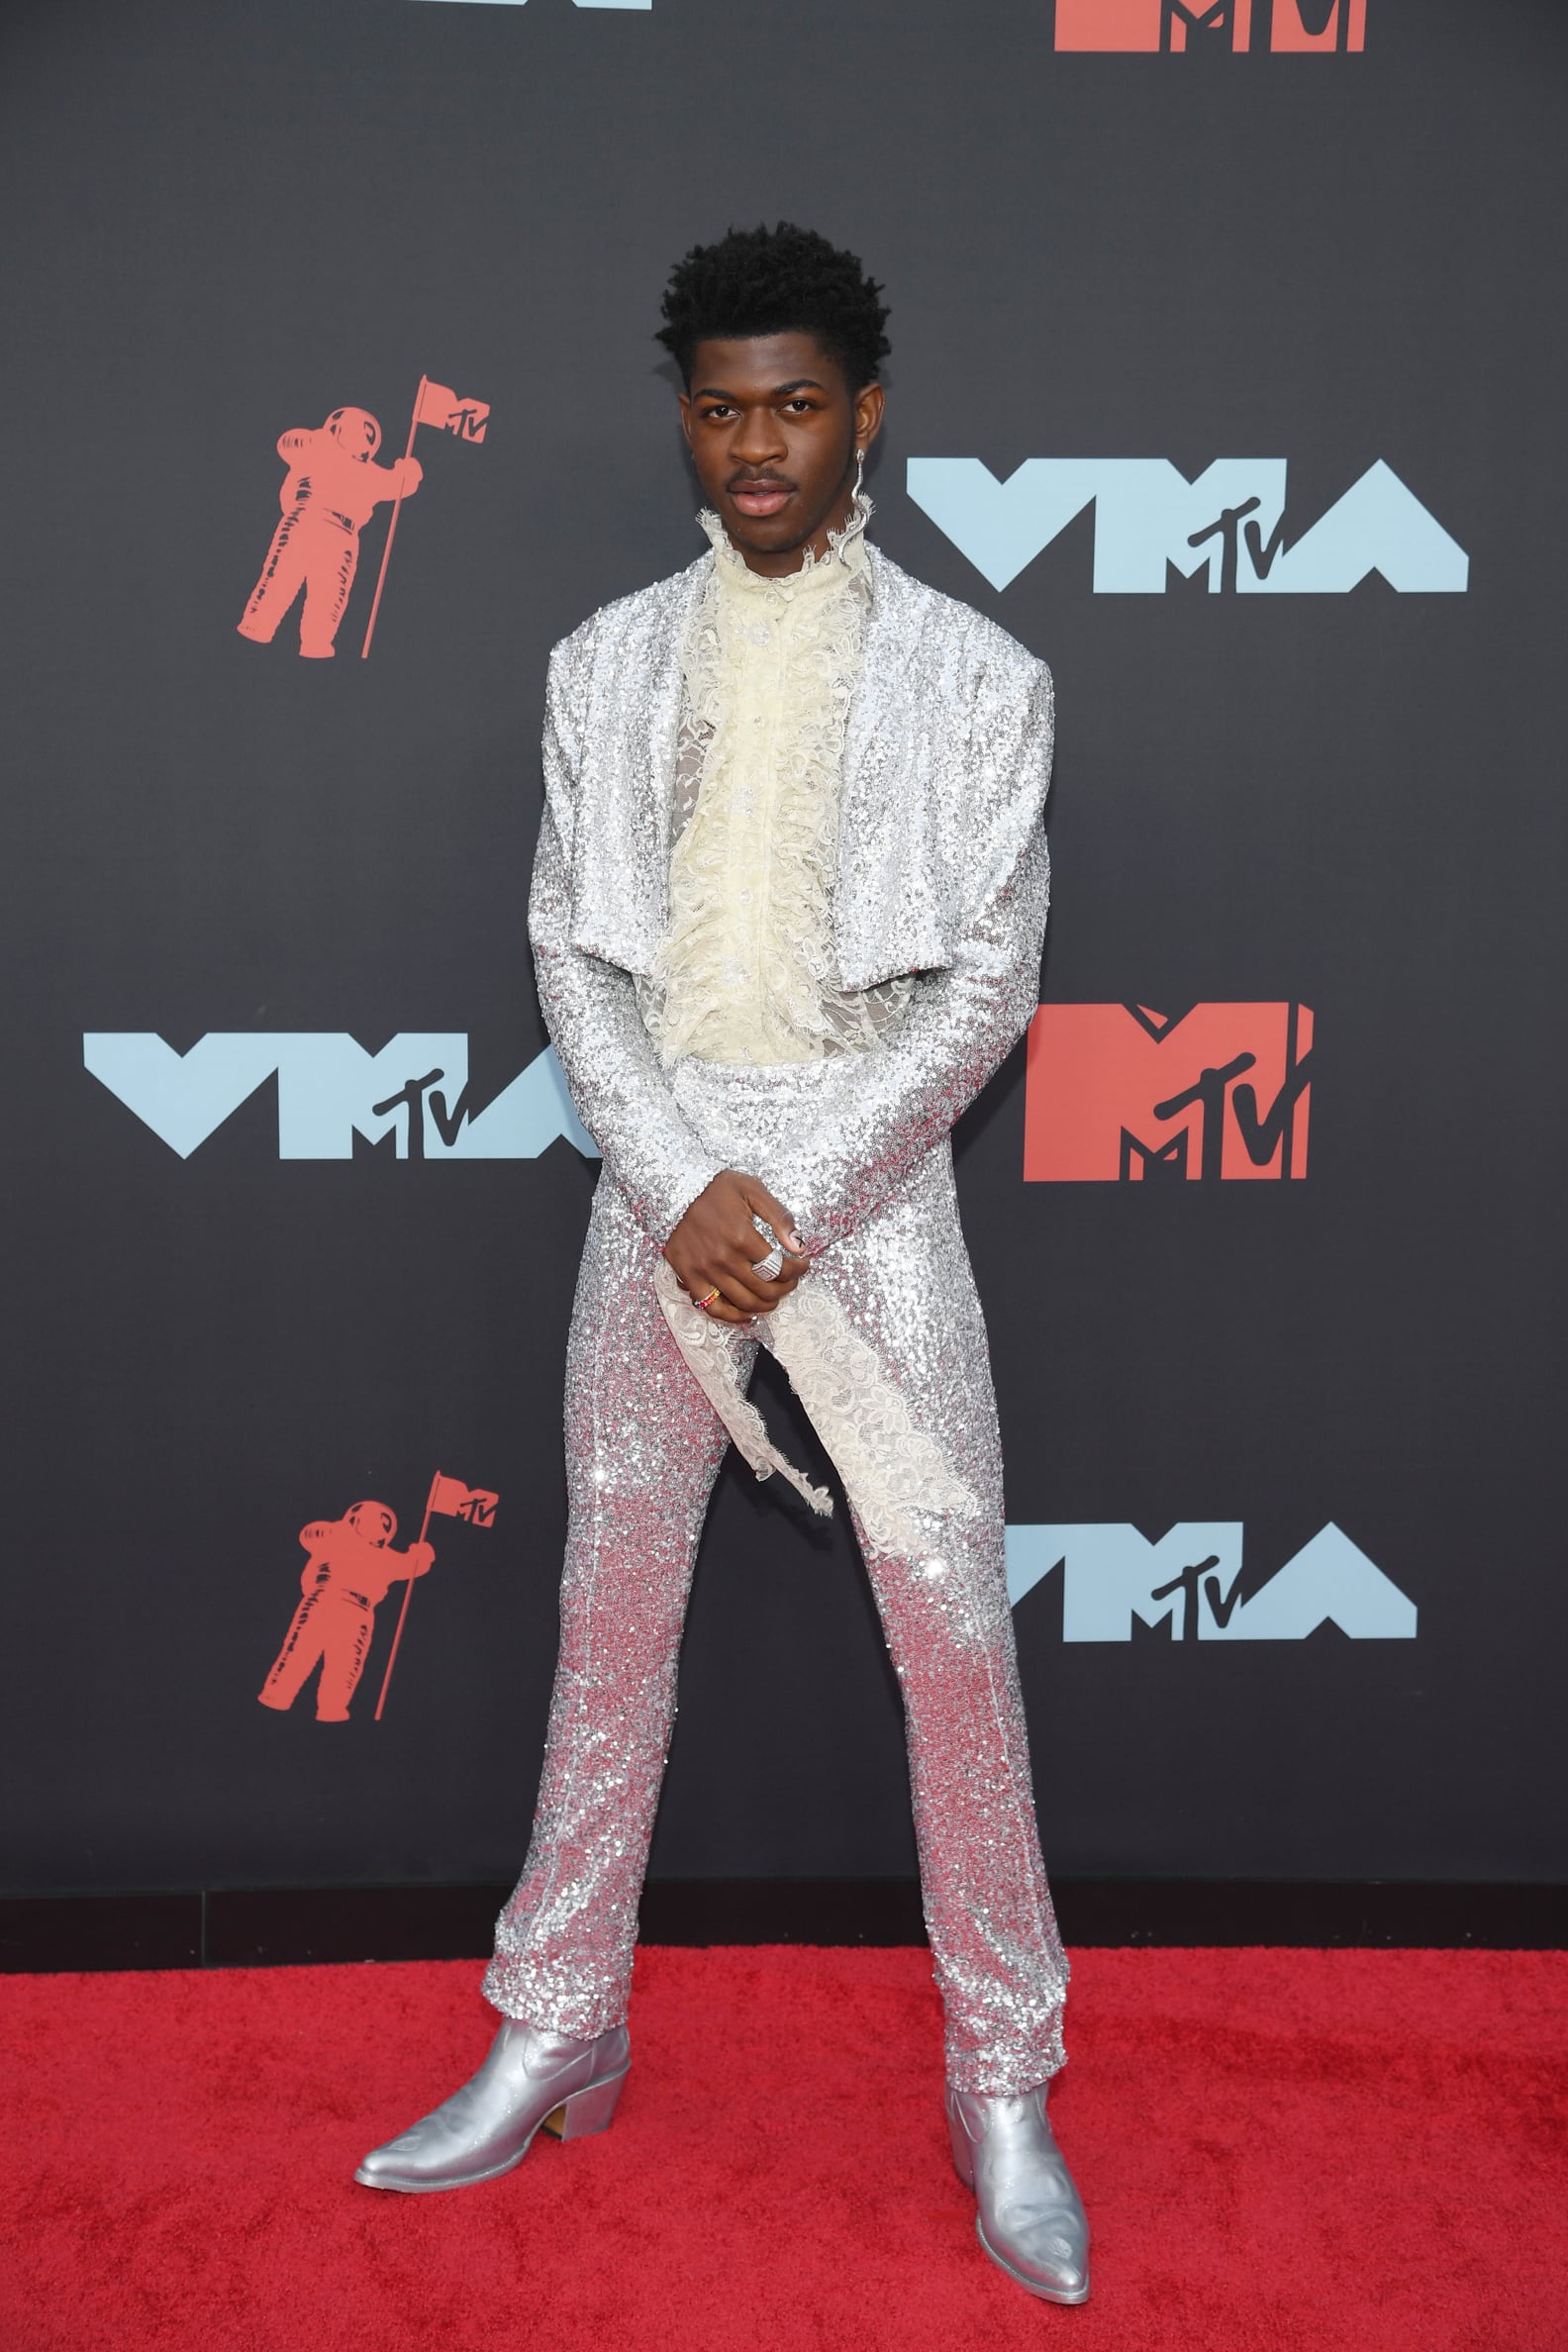 MTV VMAs 2019 Red Carpet Dresses | POPSUGAR Fashion